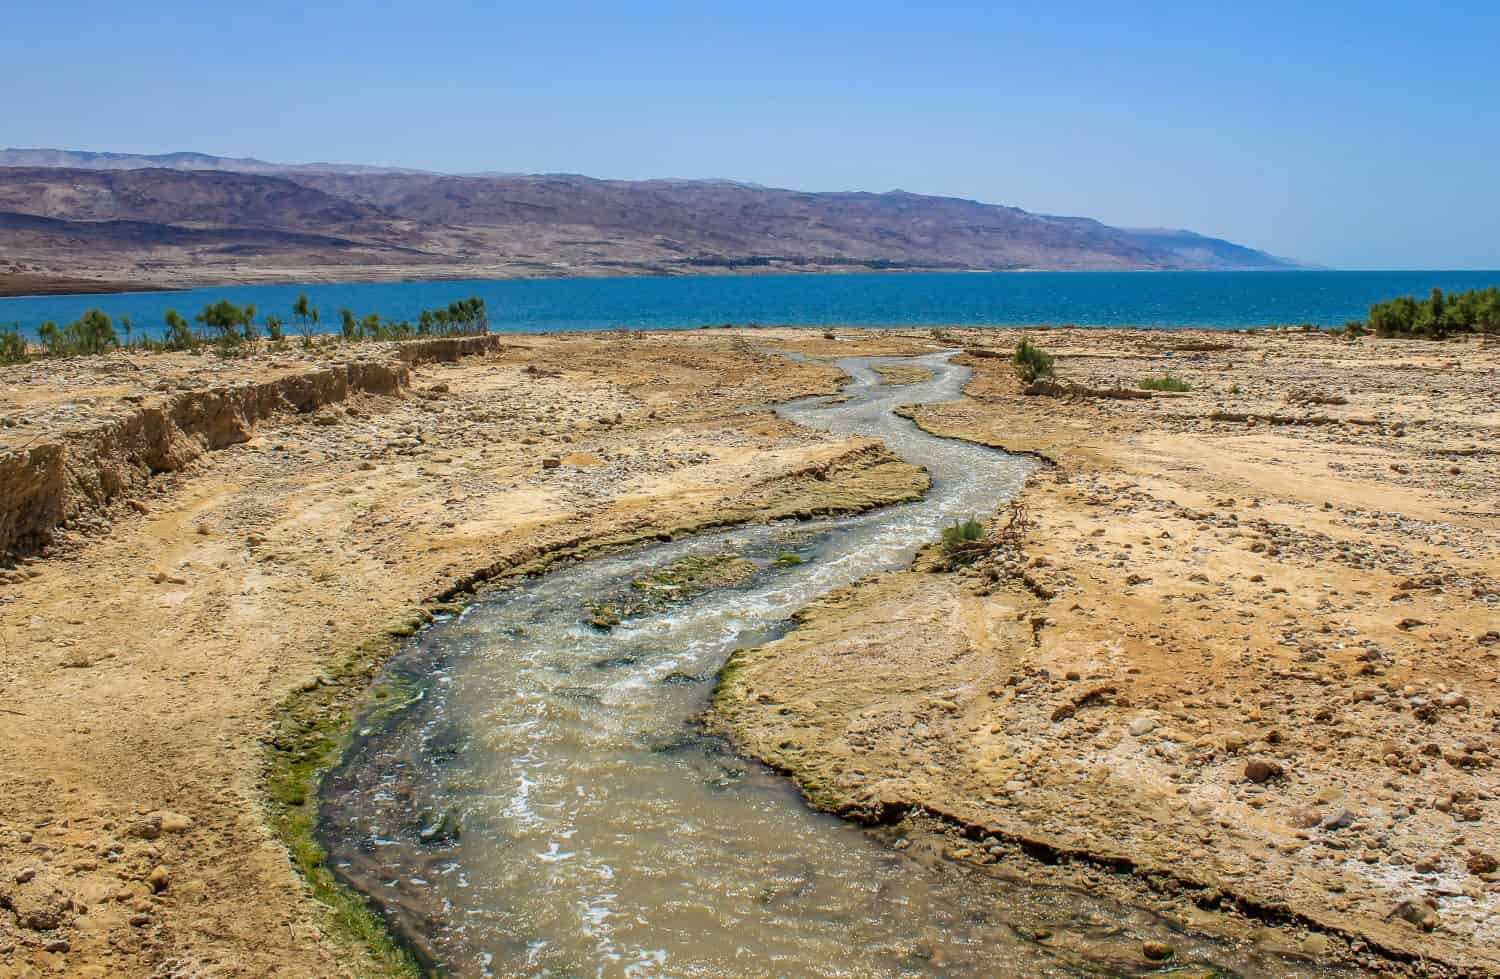 Dead Sea, Jordan River flowing to the Dead Sea